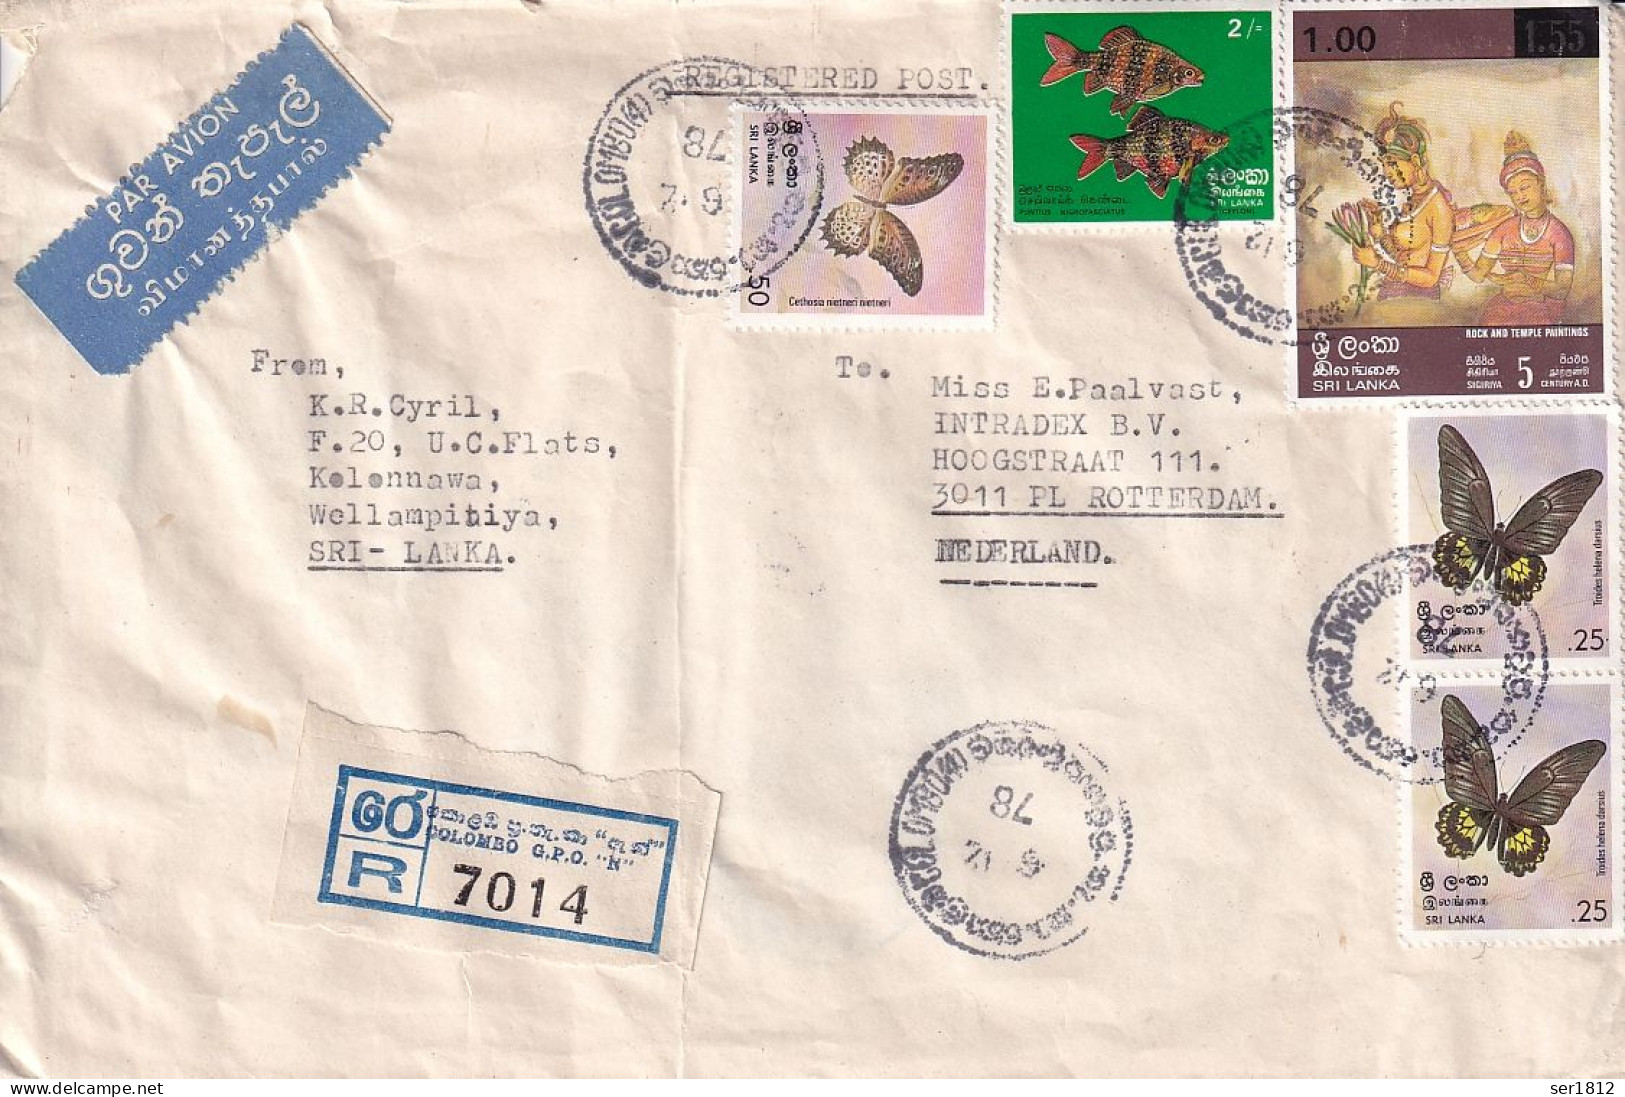 Sri Lanka 1978 Registered Cover To Rotterdam Netherlands From Kelennawa Wellampitiya - Sri Lanka (Ceylon) (1948-...)